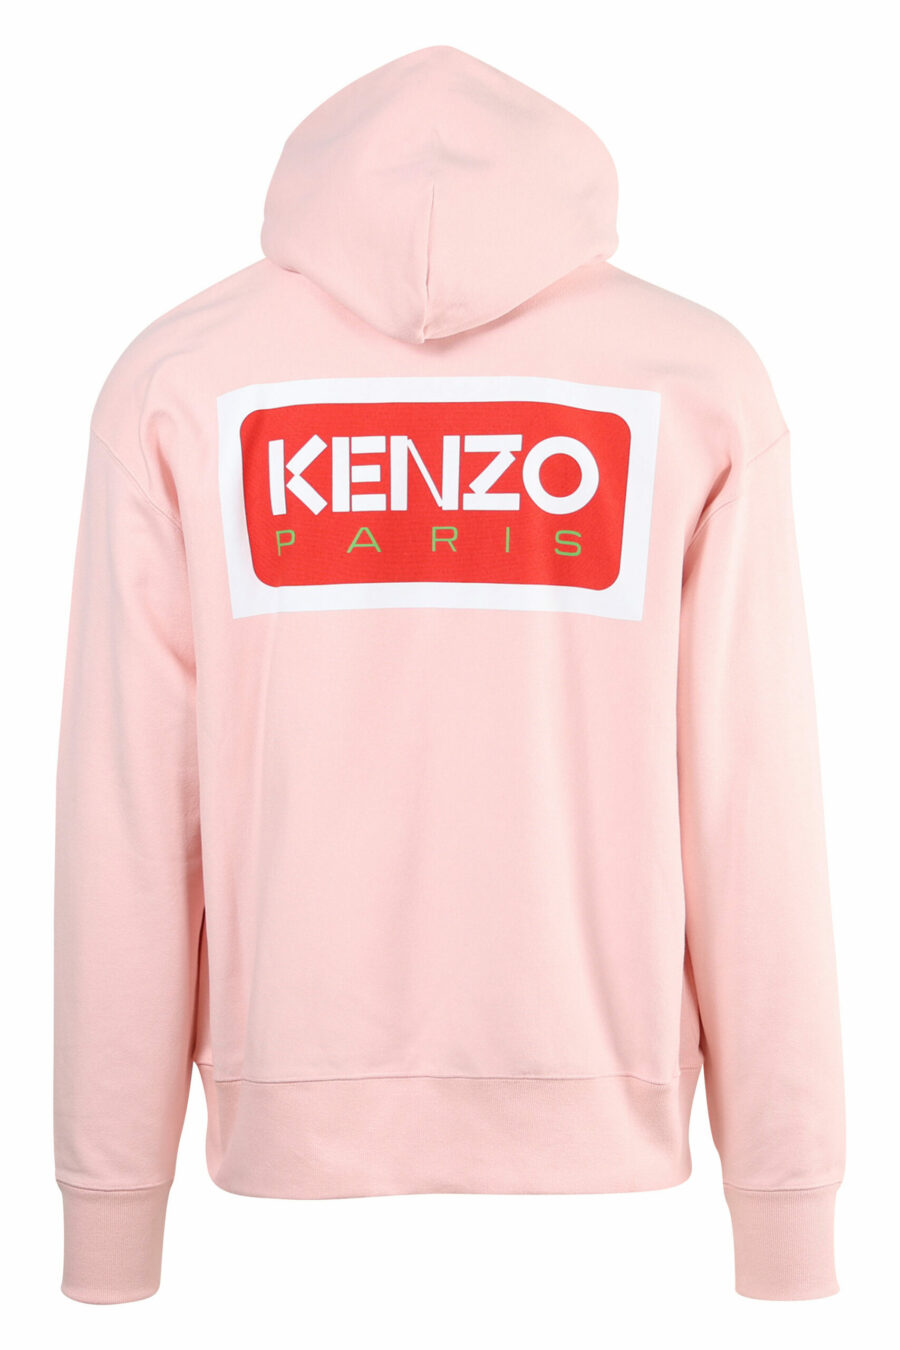 Rosa Kapuzensweatshirt mit "kenzo paris" Maxilogo auf dem Rücken - 3612230537439 1 skaliert